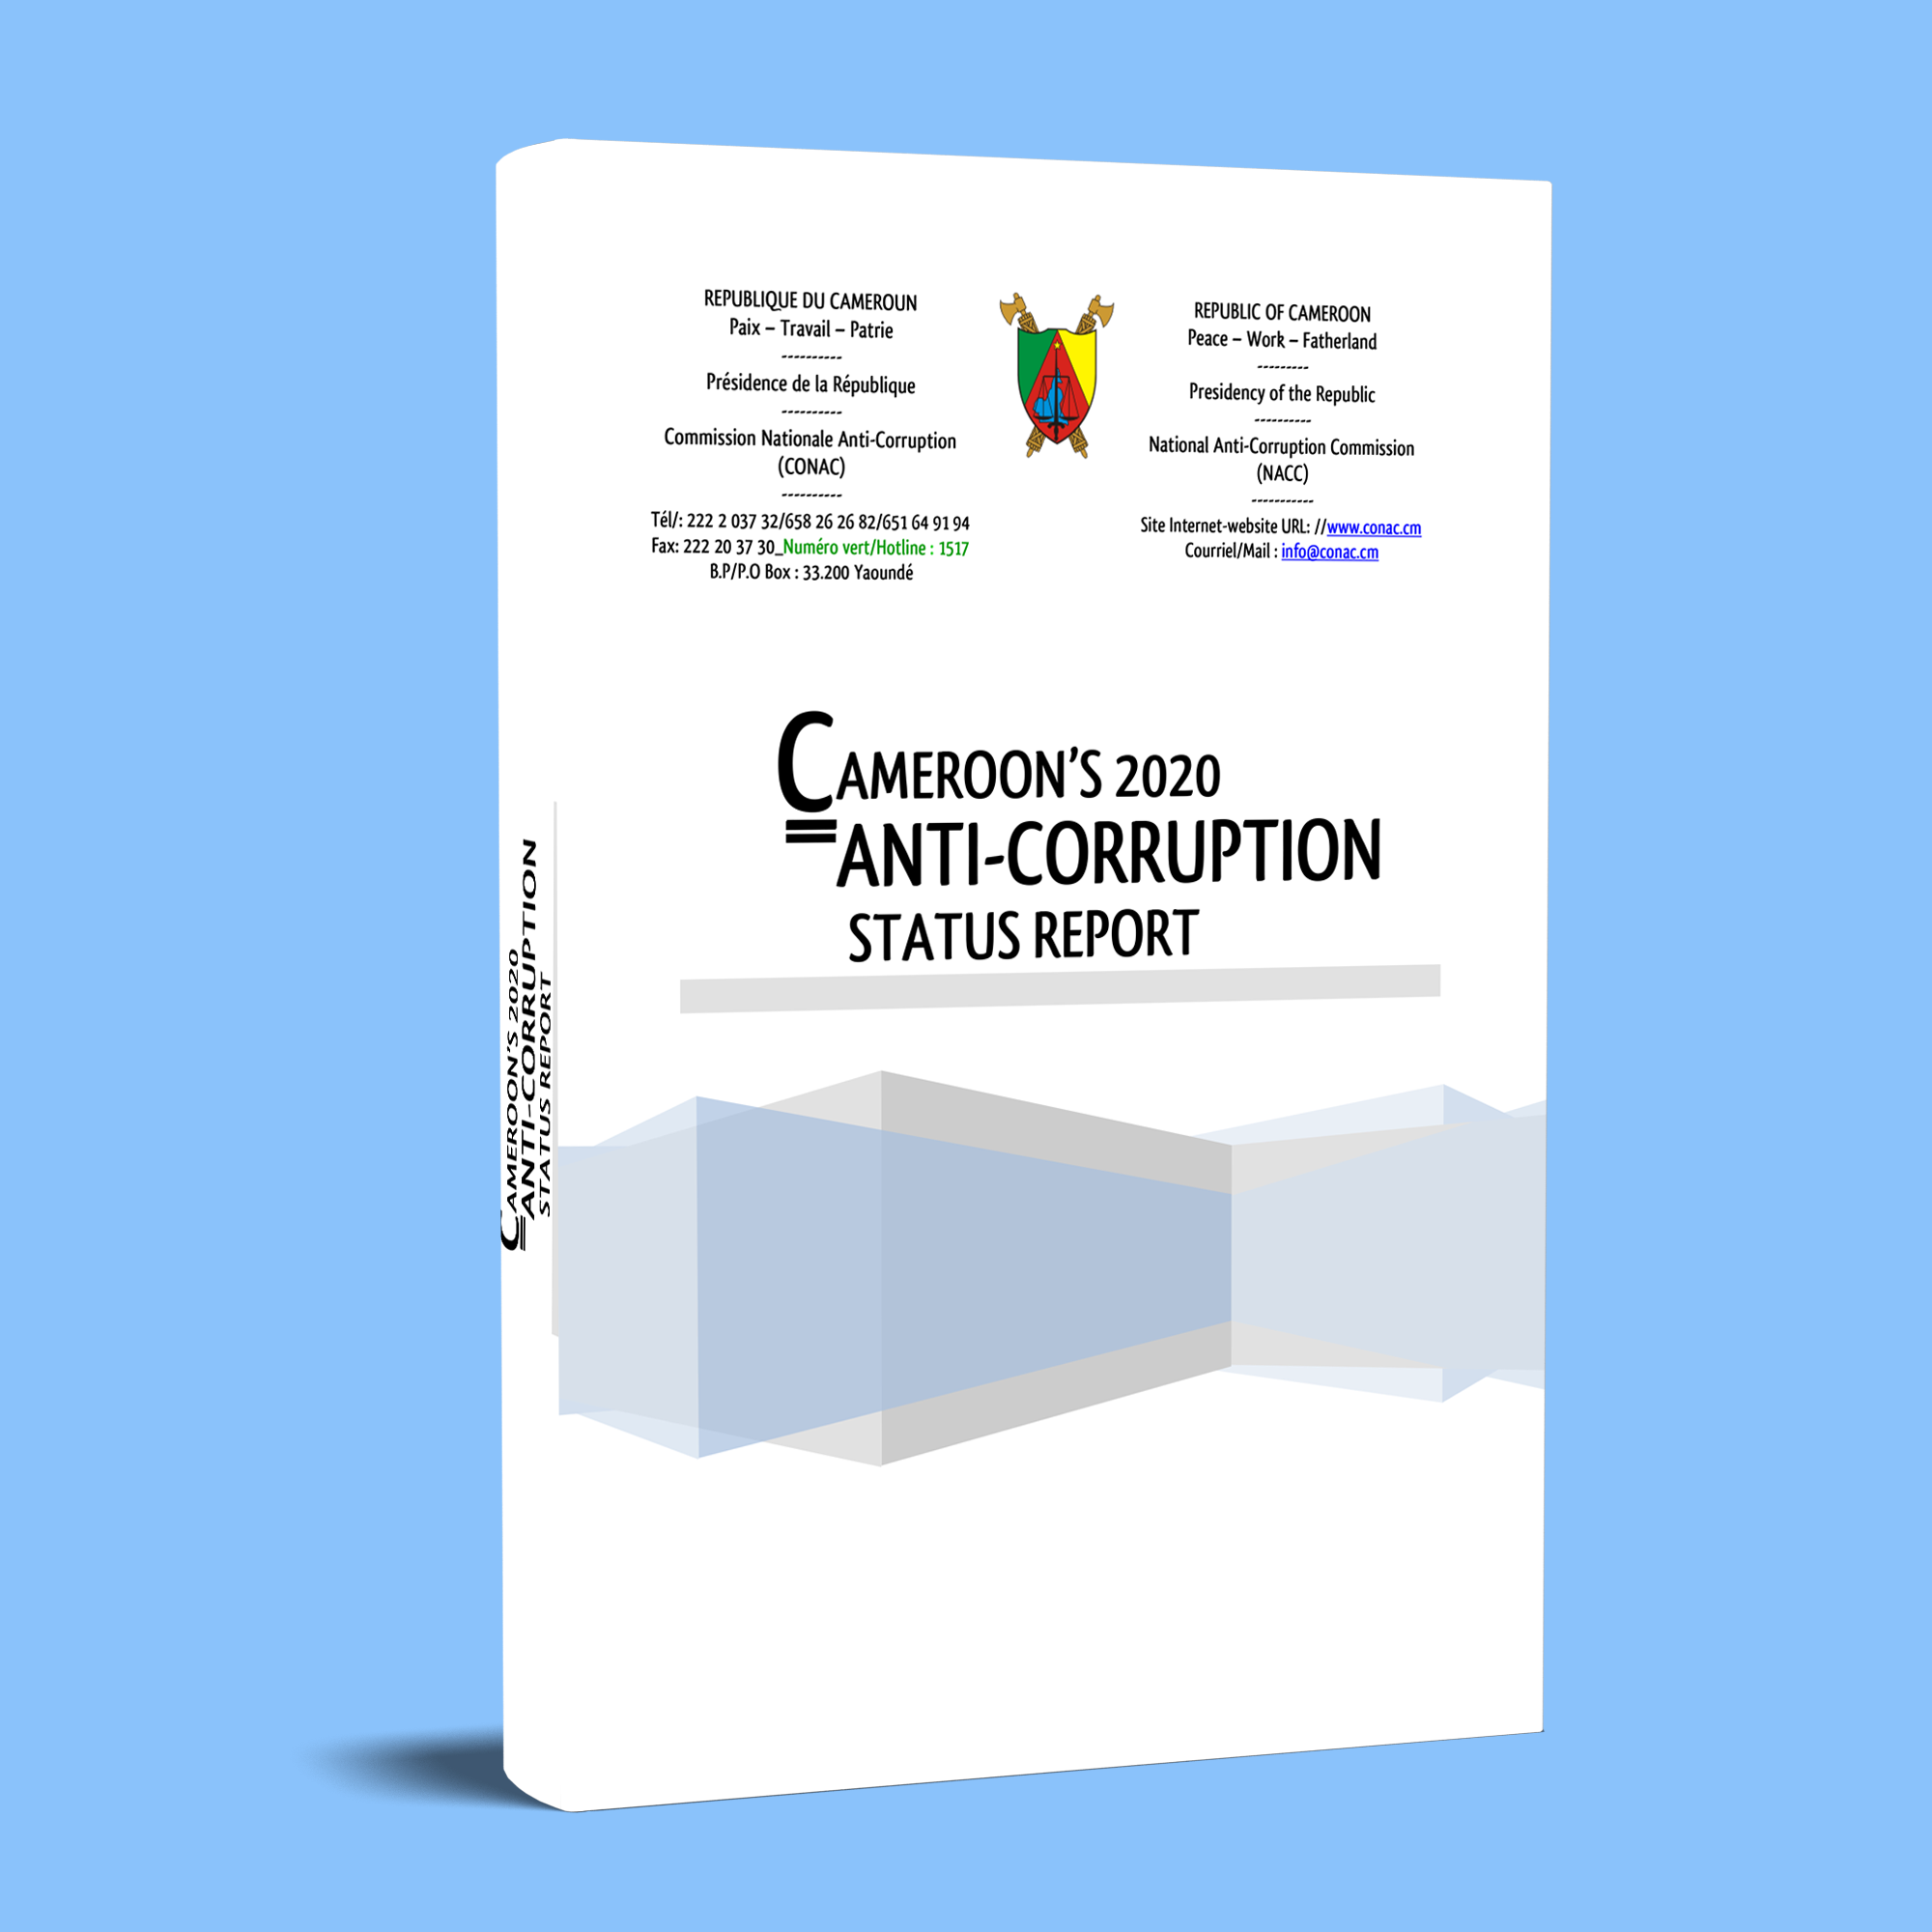 Cameroon’s 2020 Anti-Corruption Status Report Released